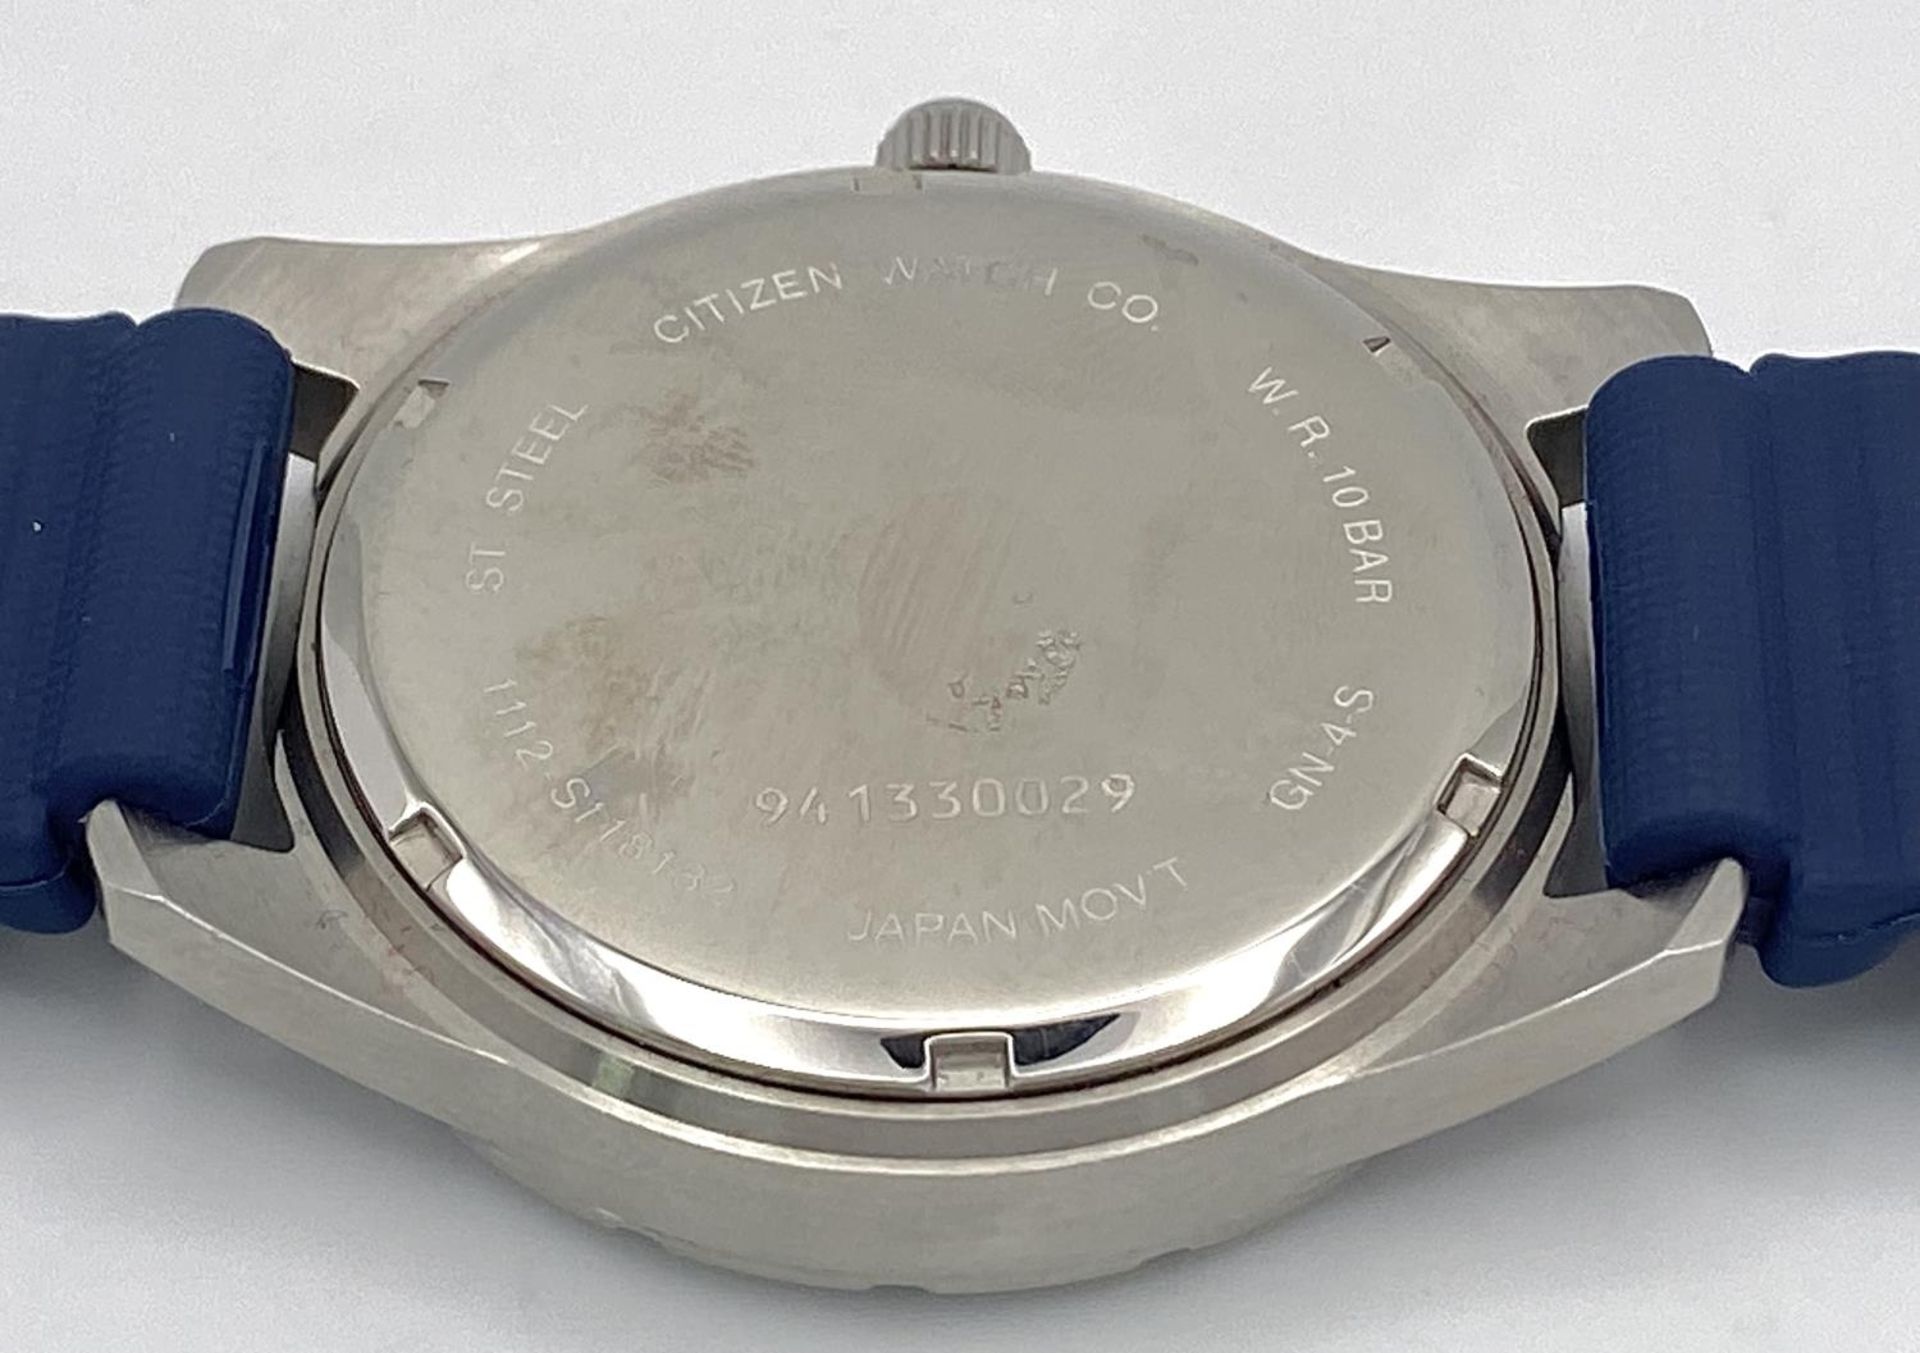 A Citizen Quartz Gents Watch. Blue rubber strap. Stainless steel case - 42mm. Blue dial with date - Bild 6 aus 6